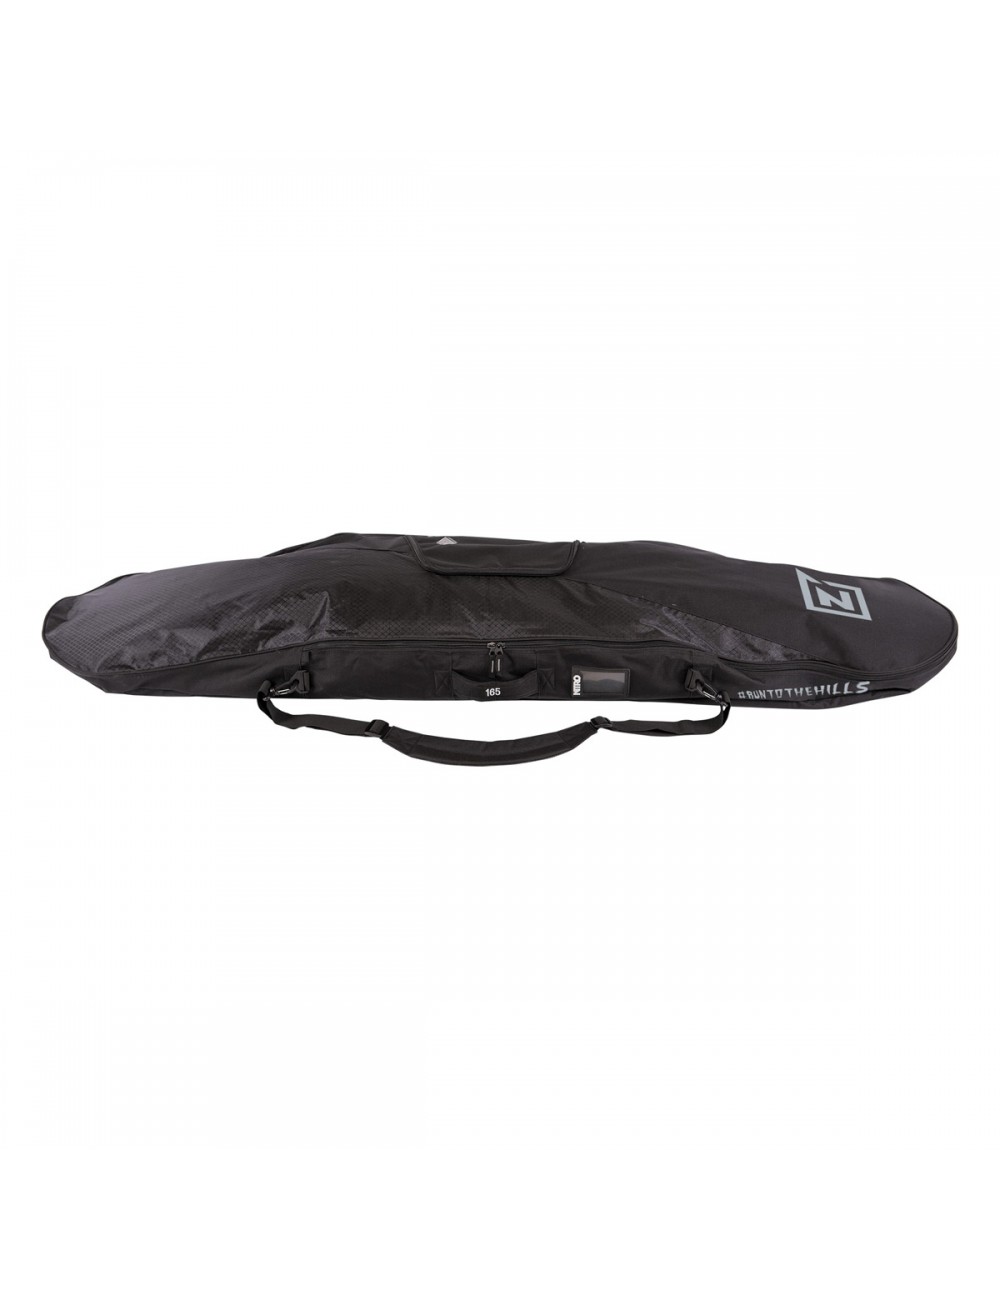 Nitro Sub Board Bag - Jet Black